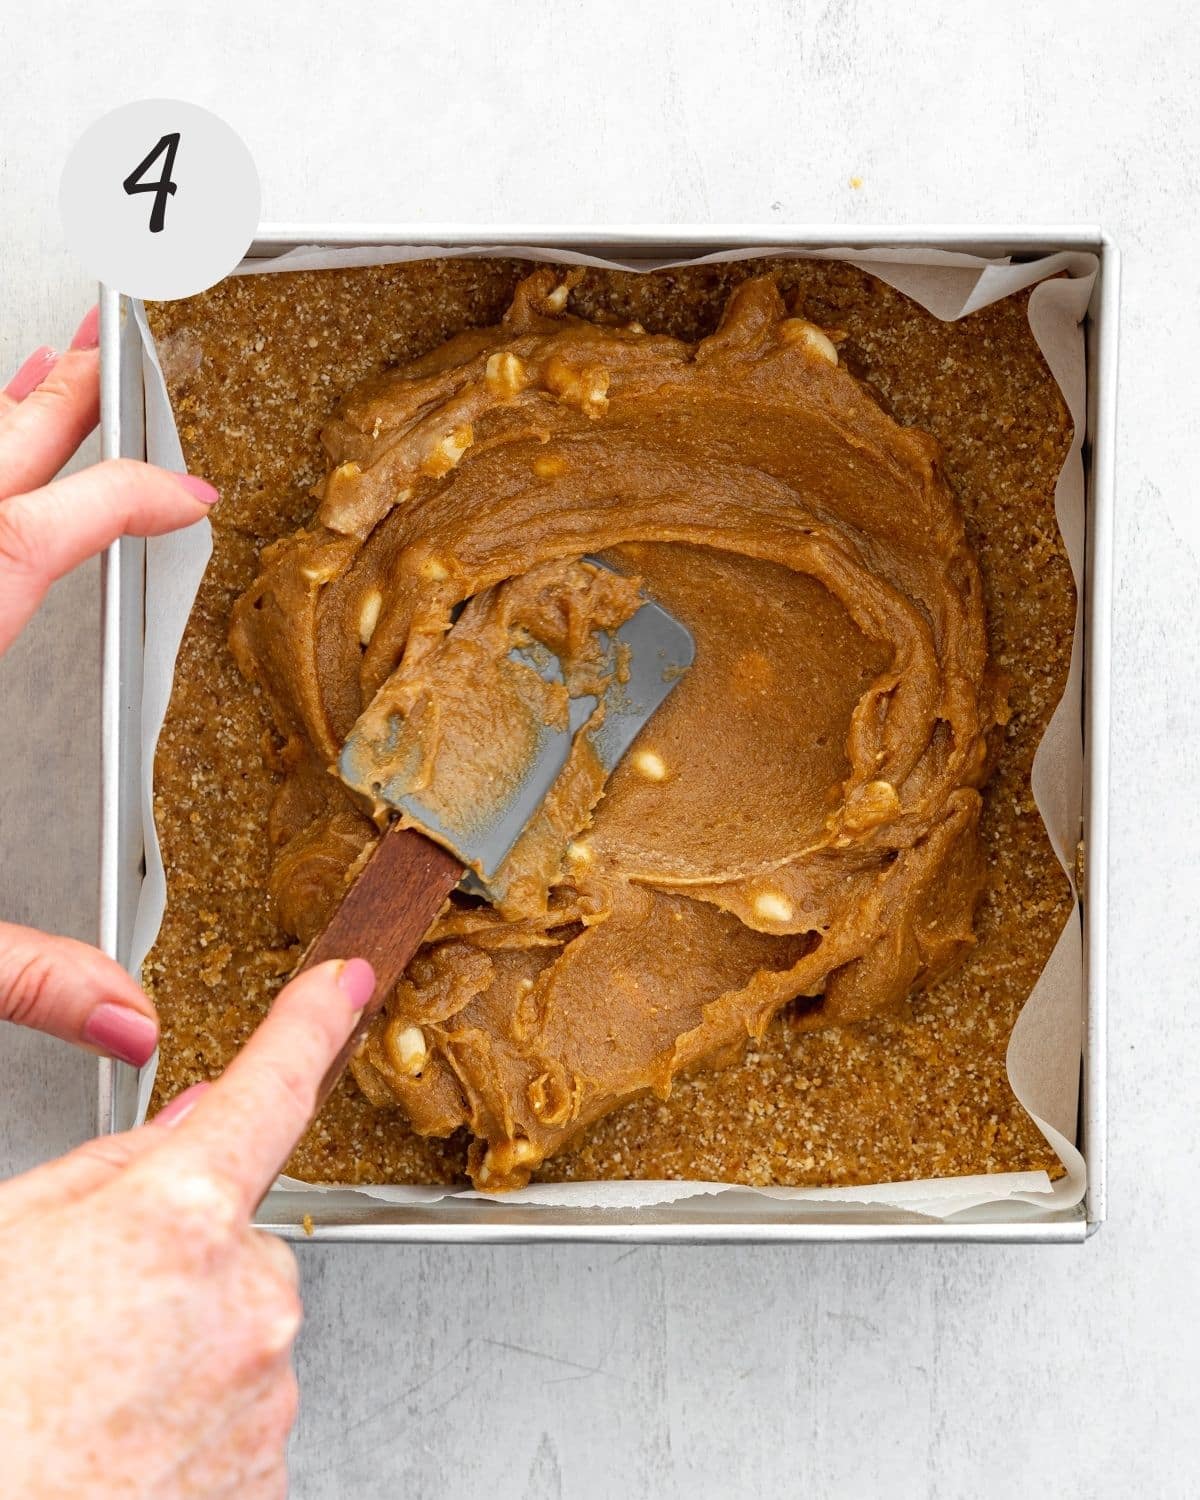 smoothing caramel into a cake tin with a spatula.